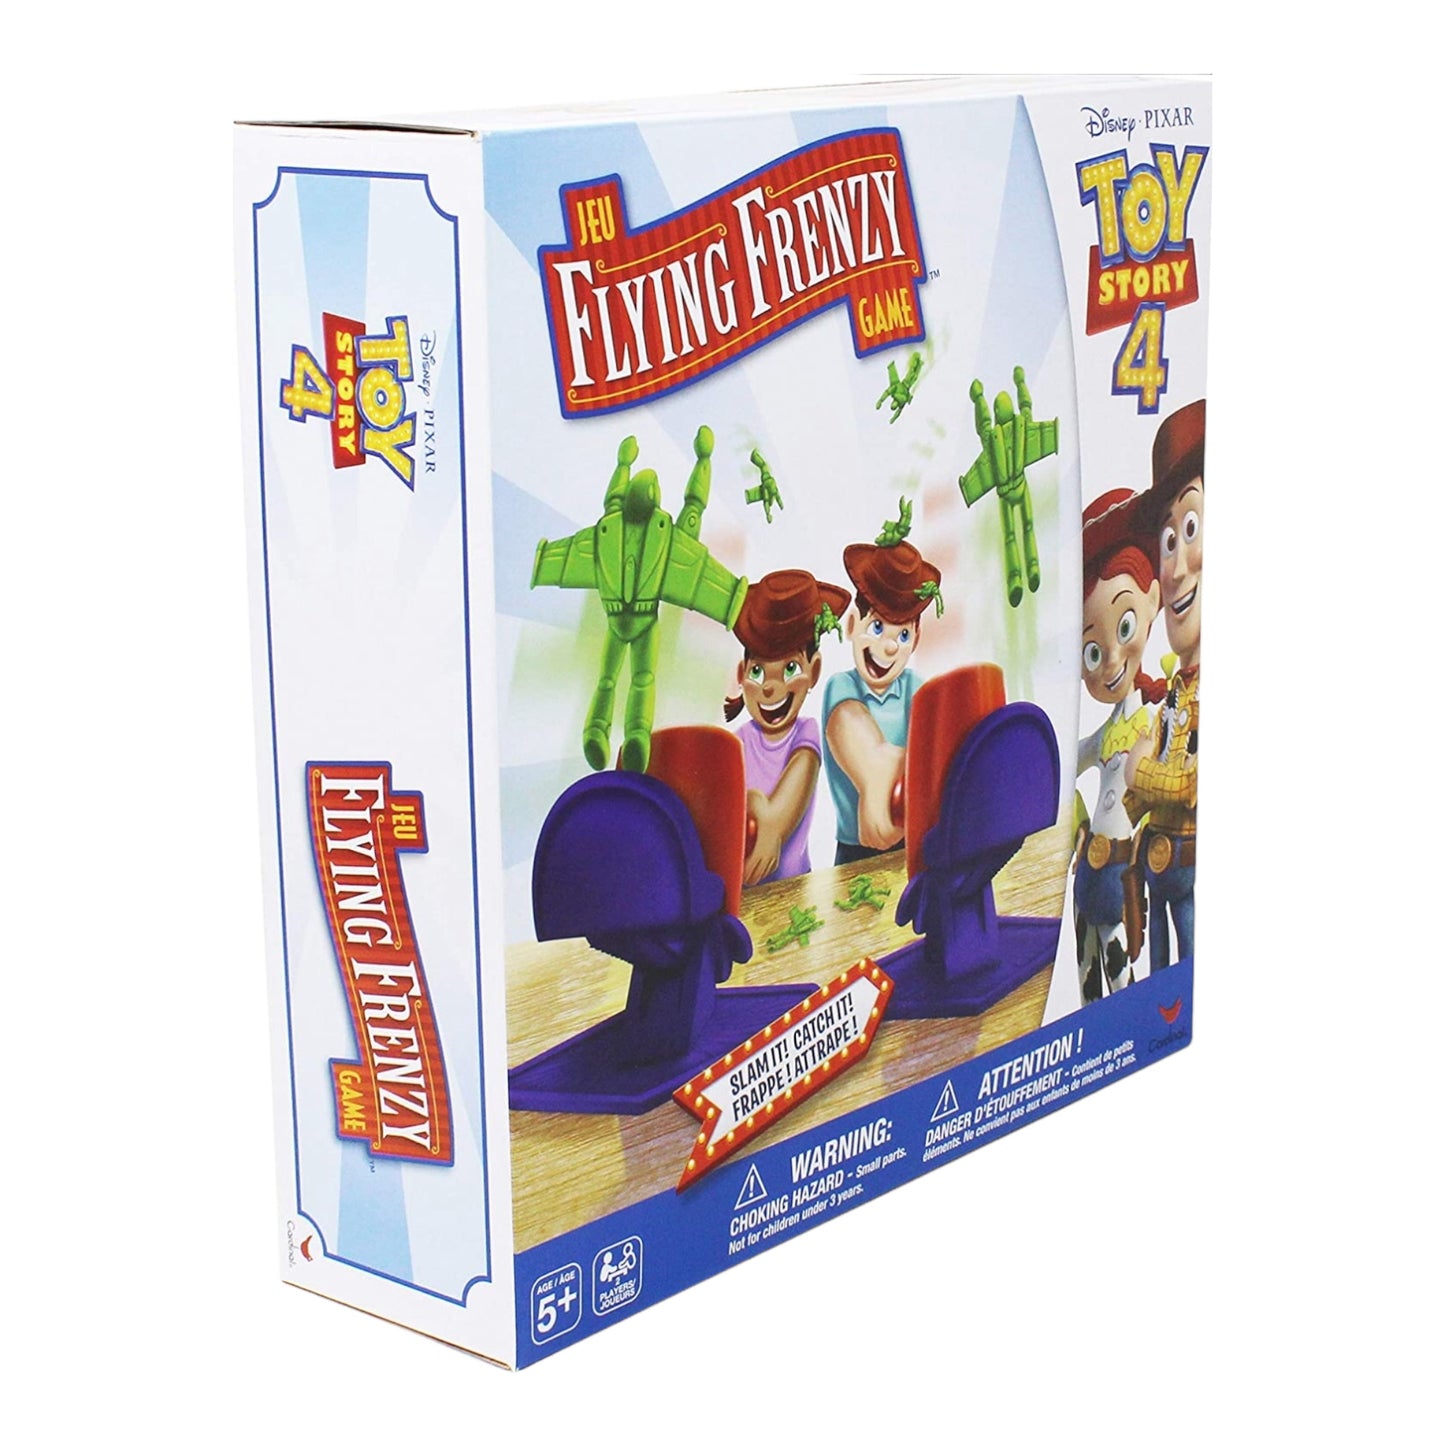 Juego de Mesa Catapulta del Oeste Flying Frenzy Toy Story 4